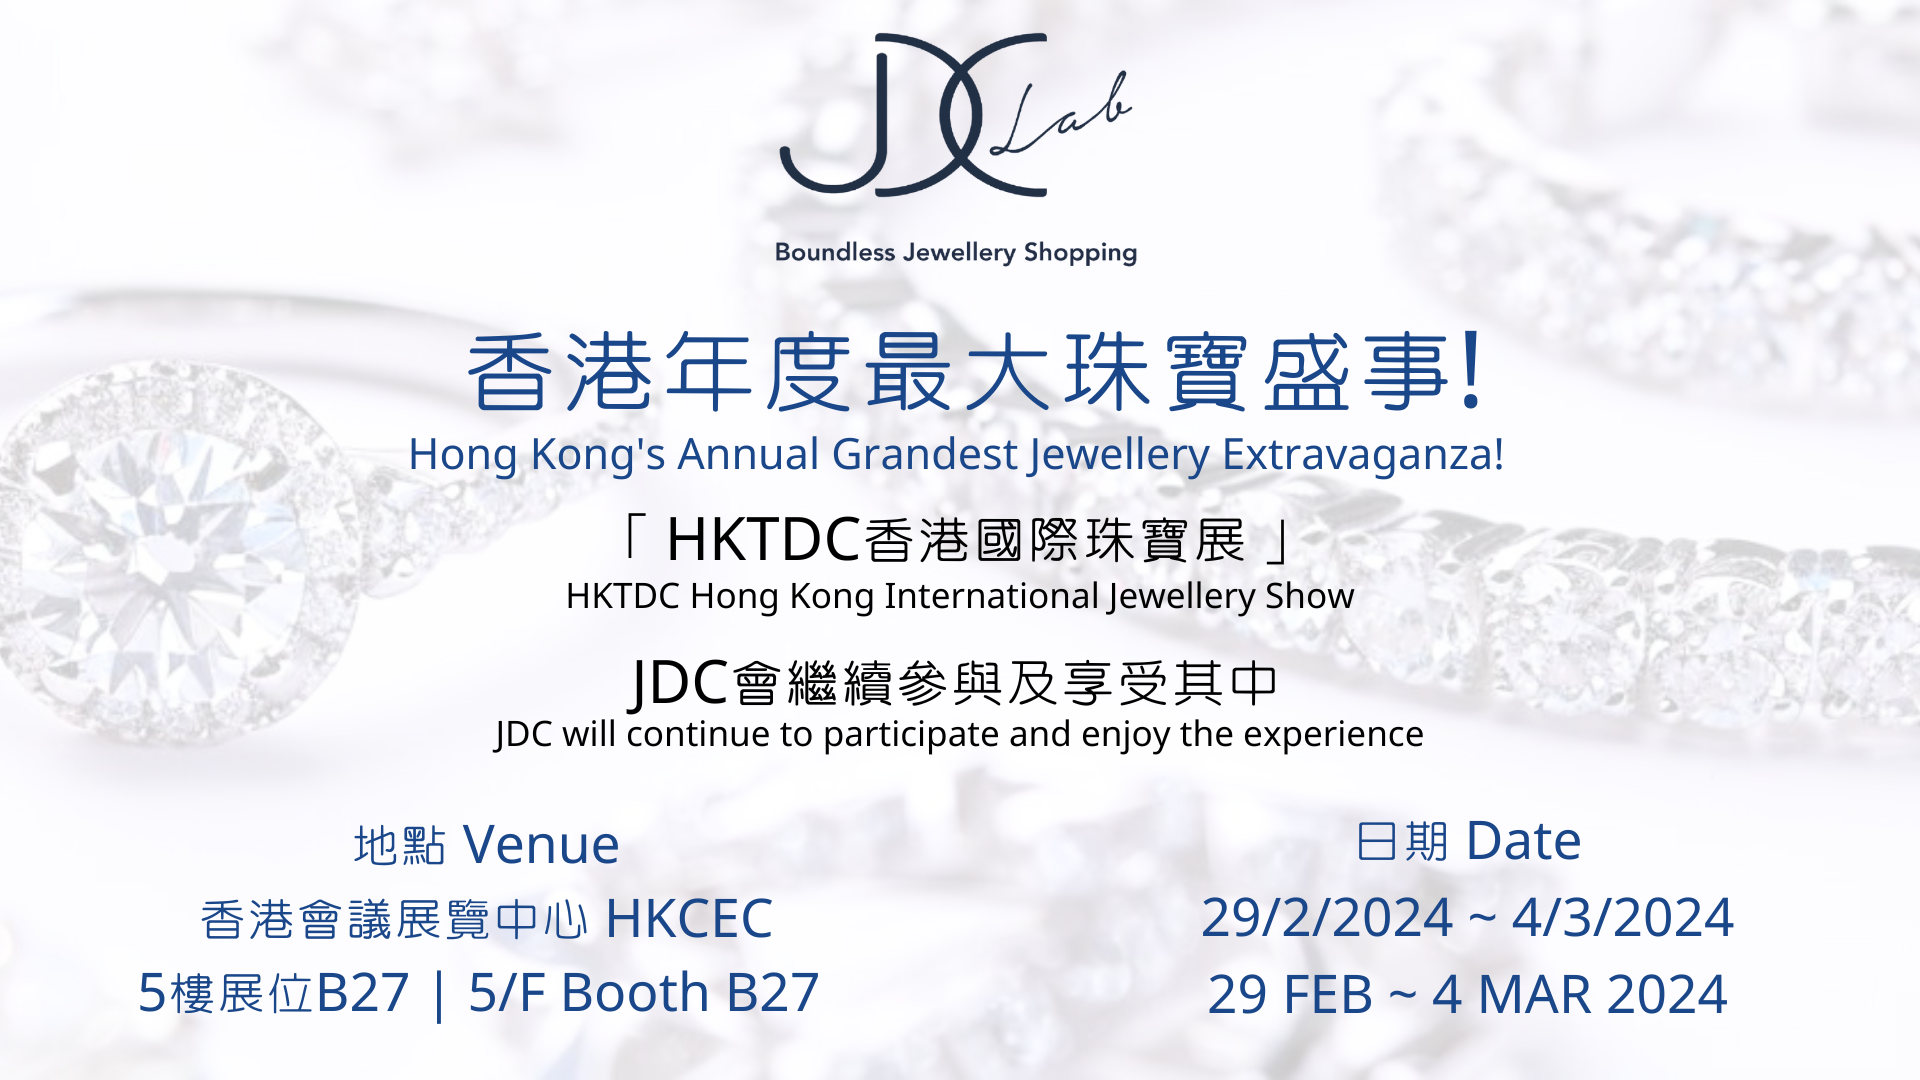 JDC x HKTDC 香港國際珠寶展